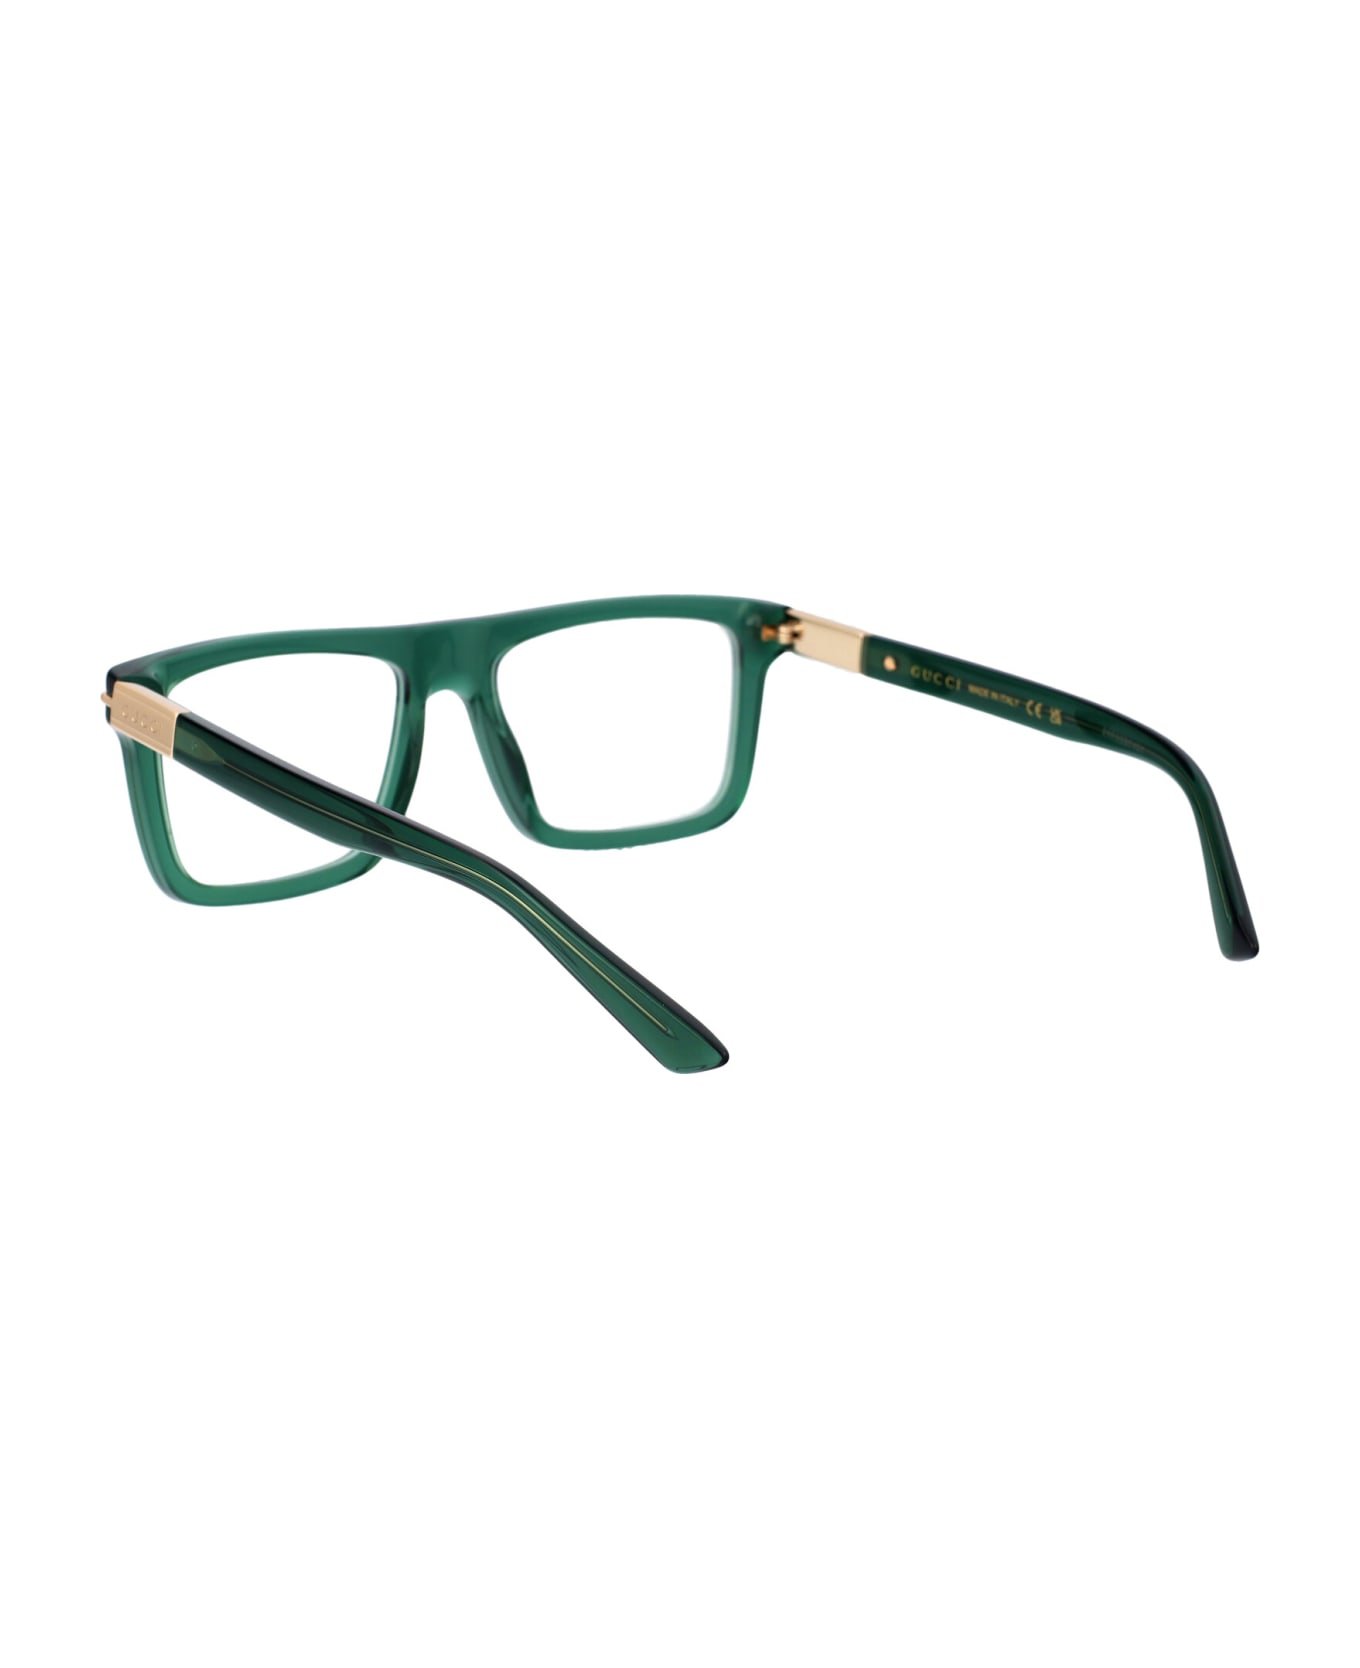 Gucci Eyewear Gg1504o Glasses - 003 GREEN GREEN TRANSPARENT